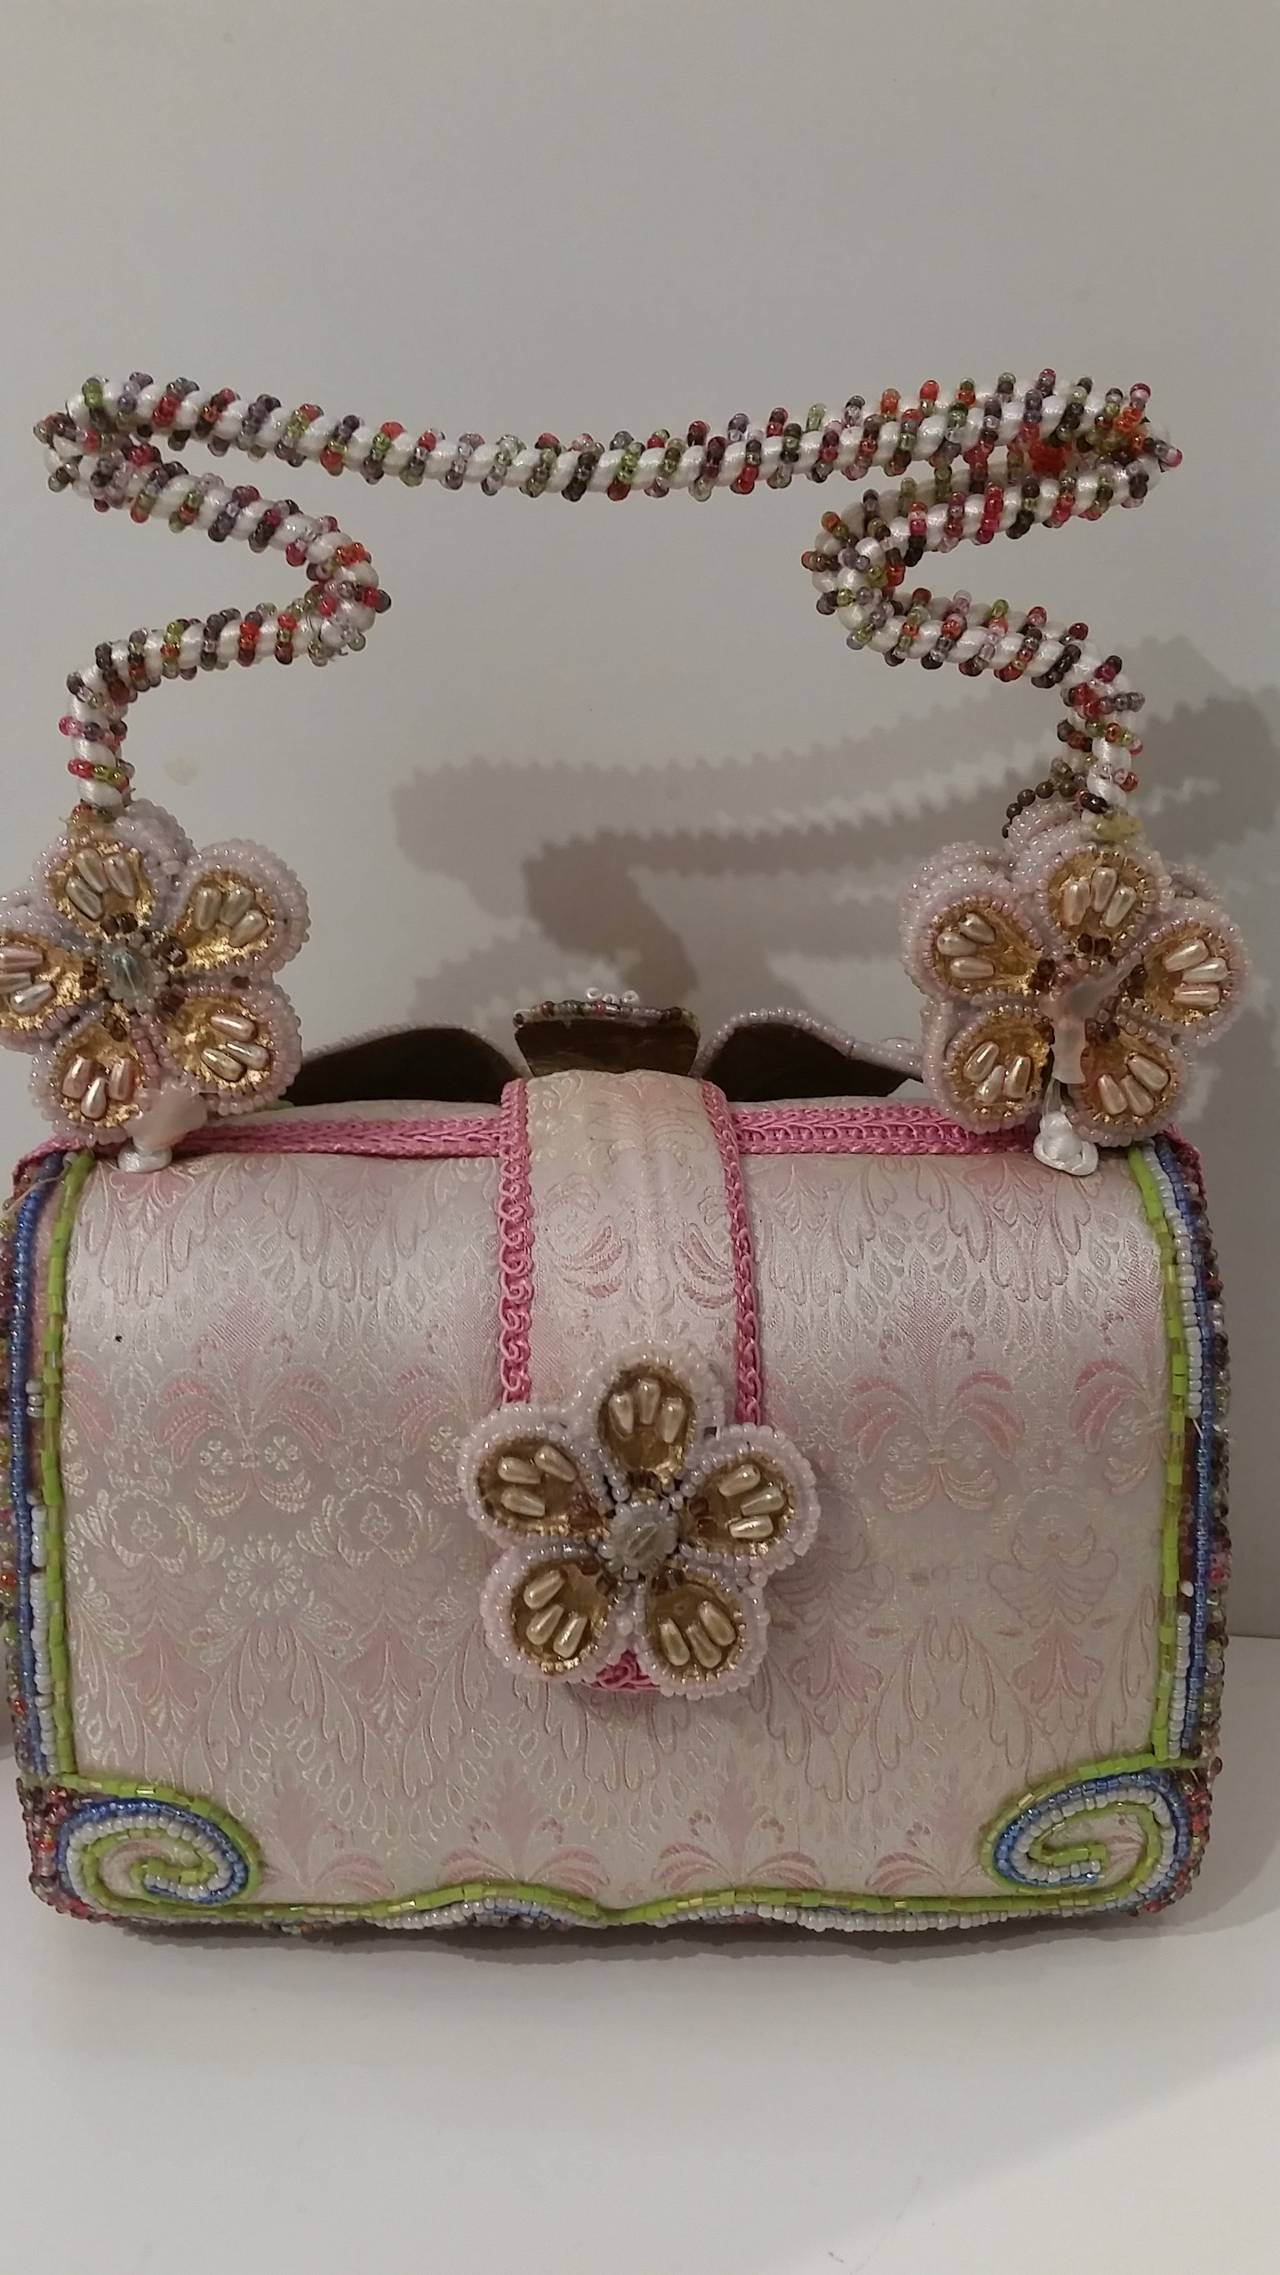 Women's 1990s Mary Frances multicoloured handbag with beads